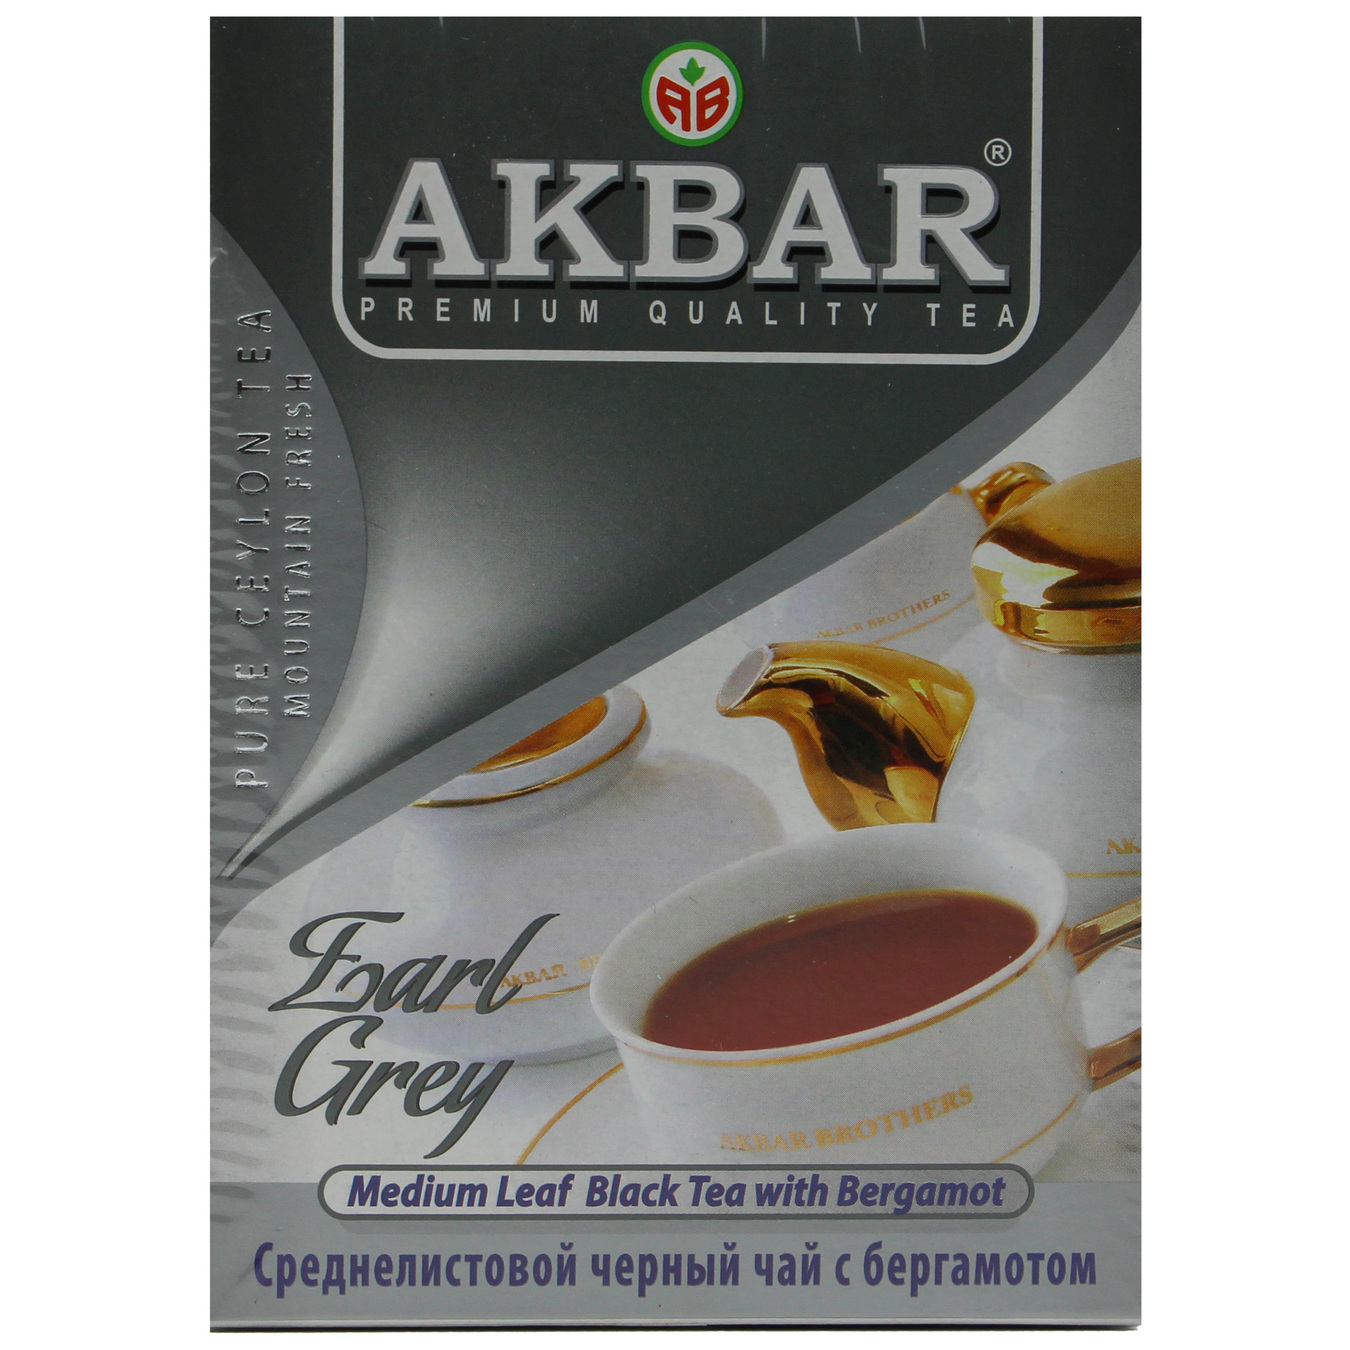 Akbar Earl Grey Black tea 100g